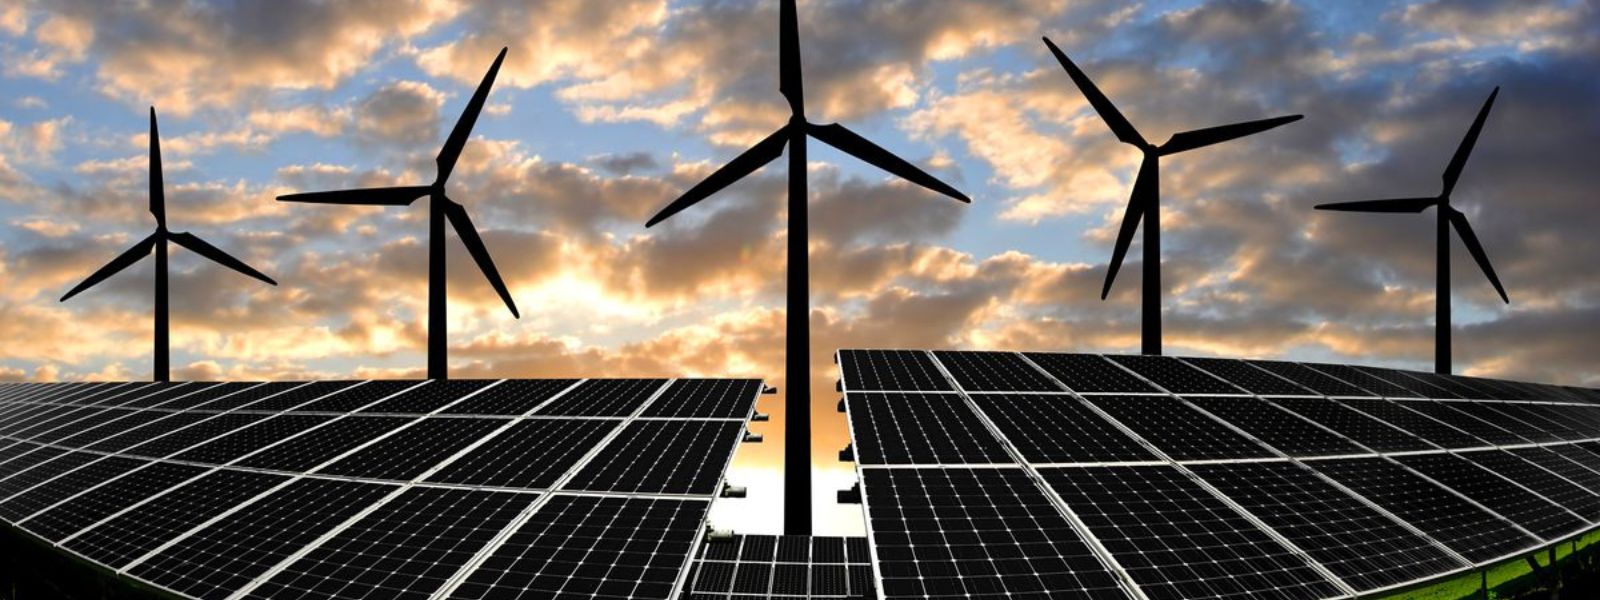 Sri Lanka, India to promote renewable energy